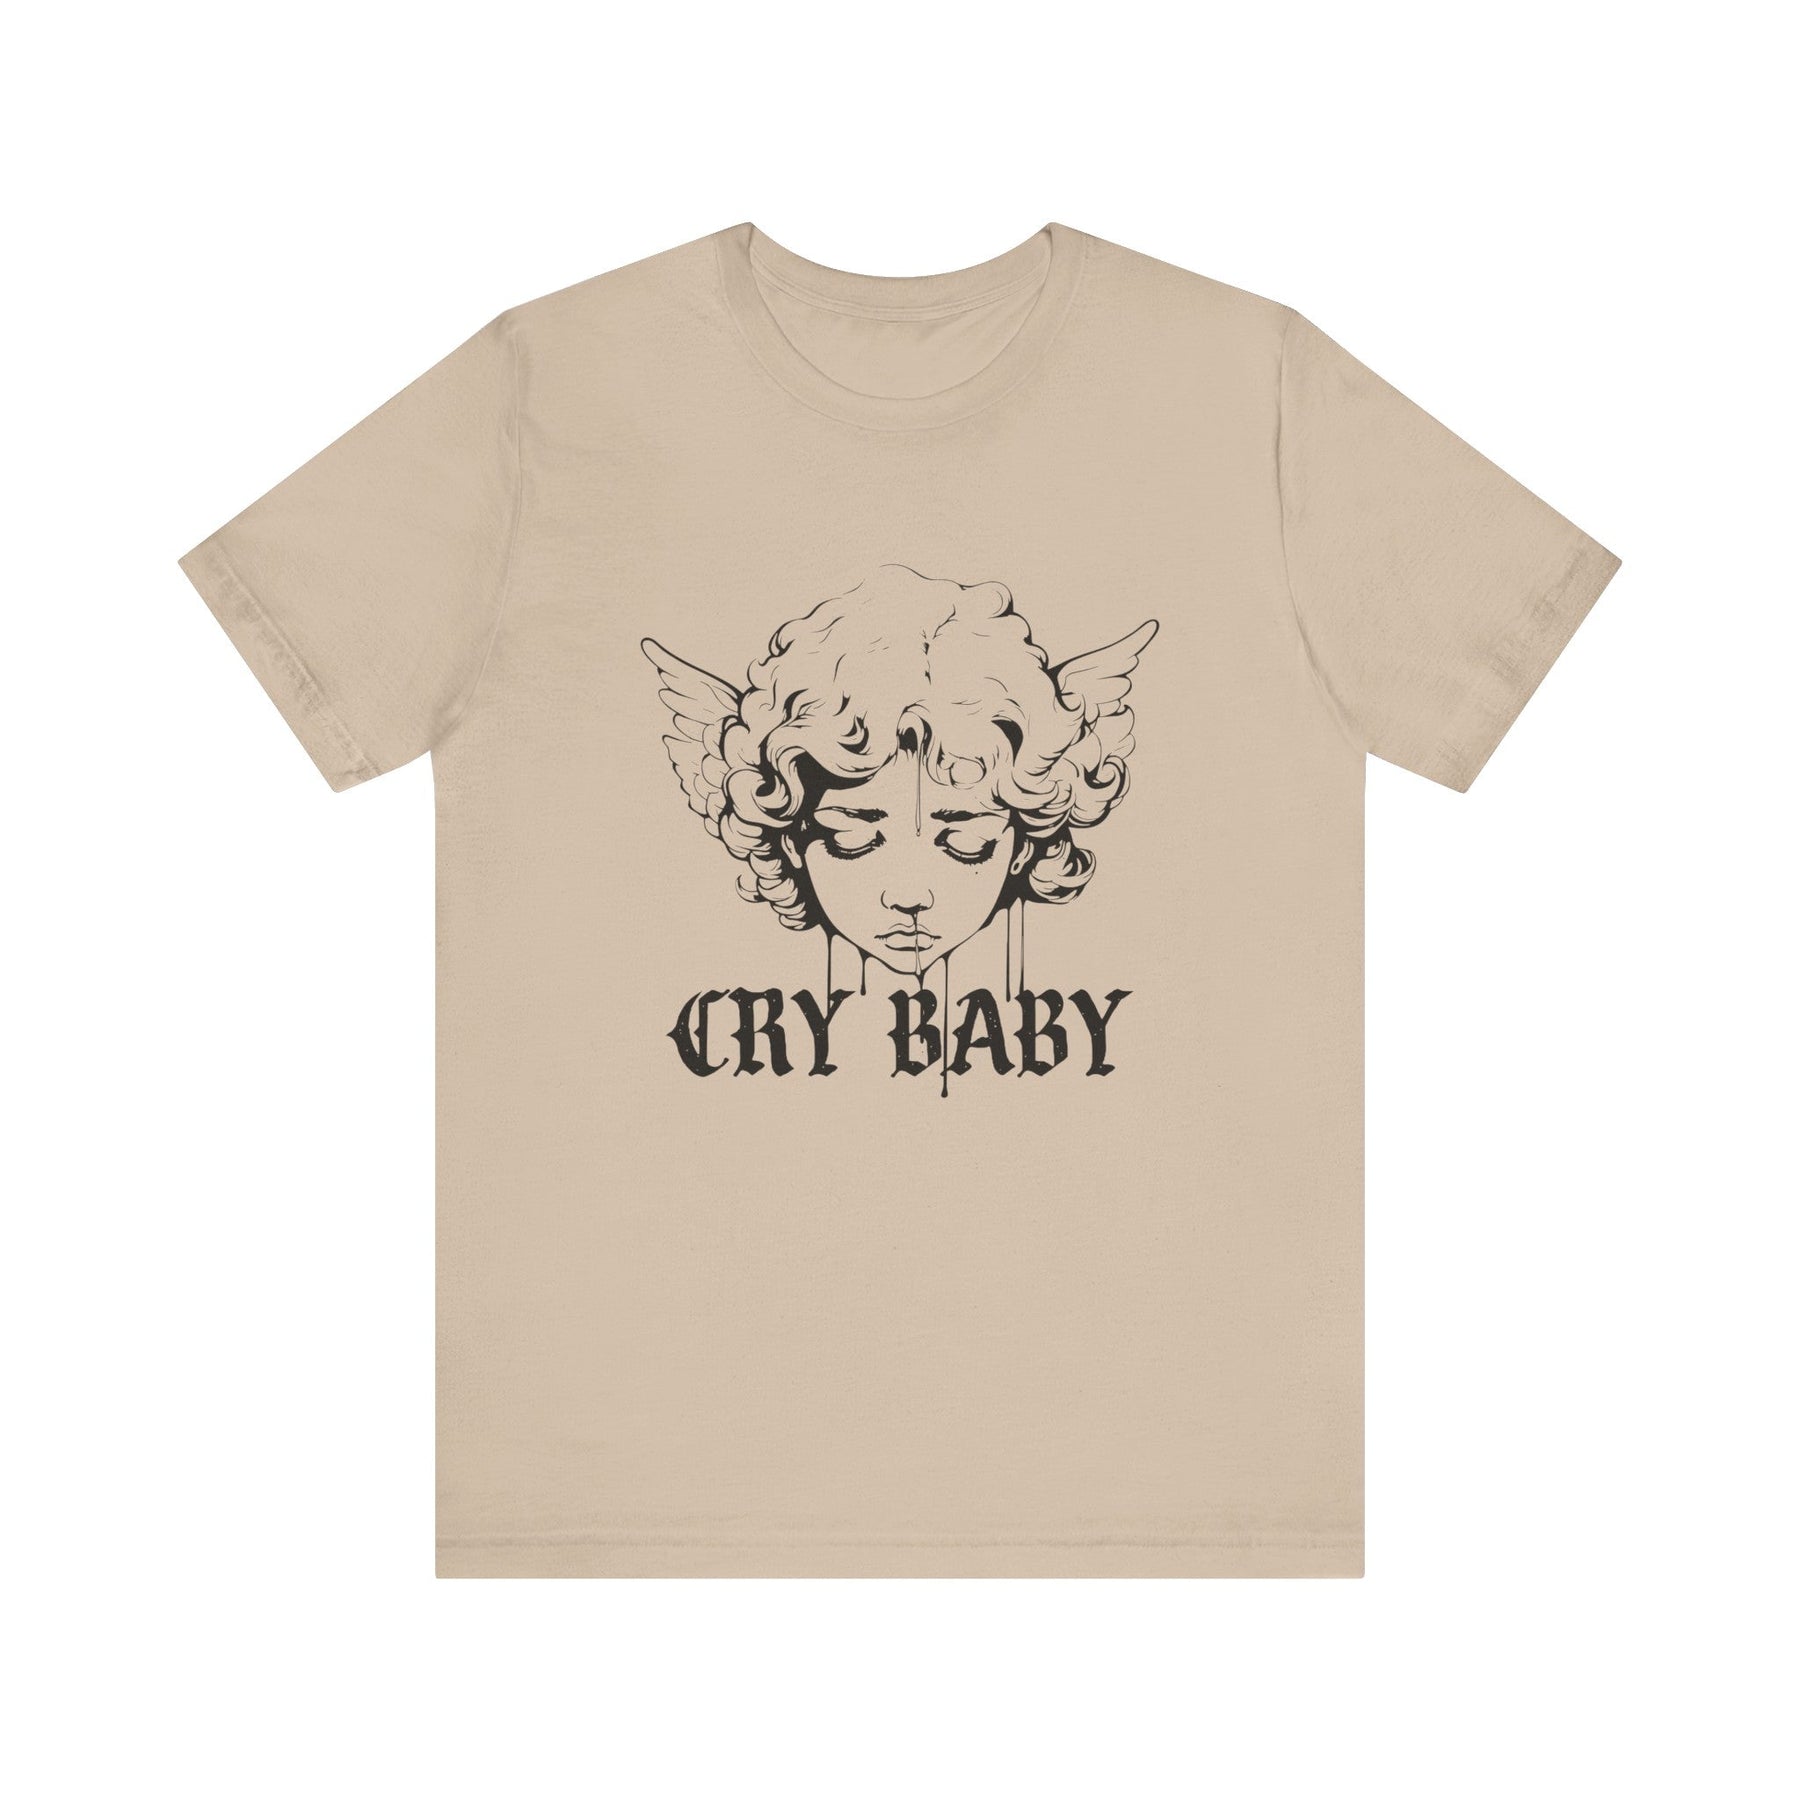 Crybaby Cherub T - Shirt - Goth Cloth Co.T - Shirt34516010804269121260